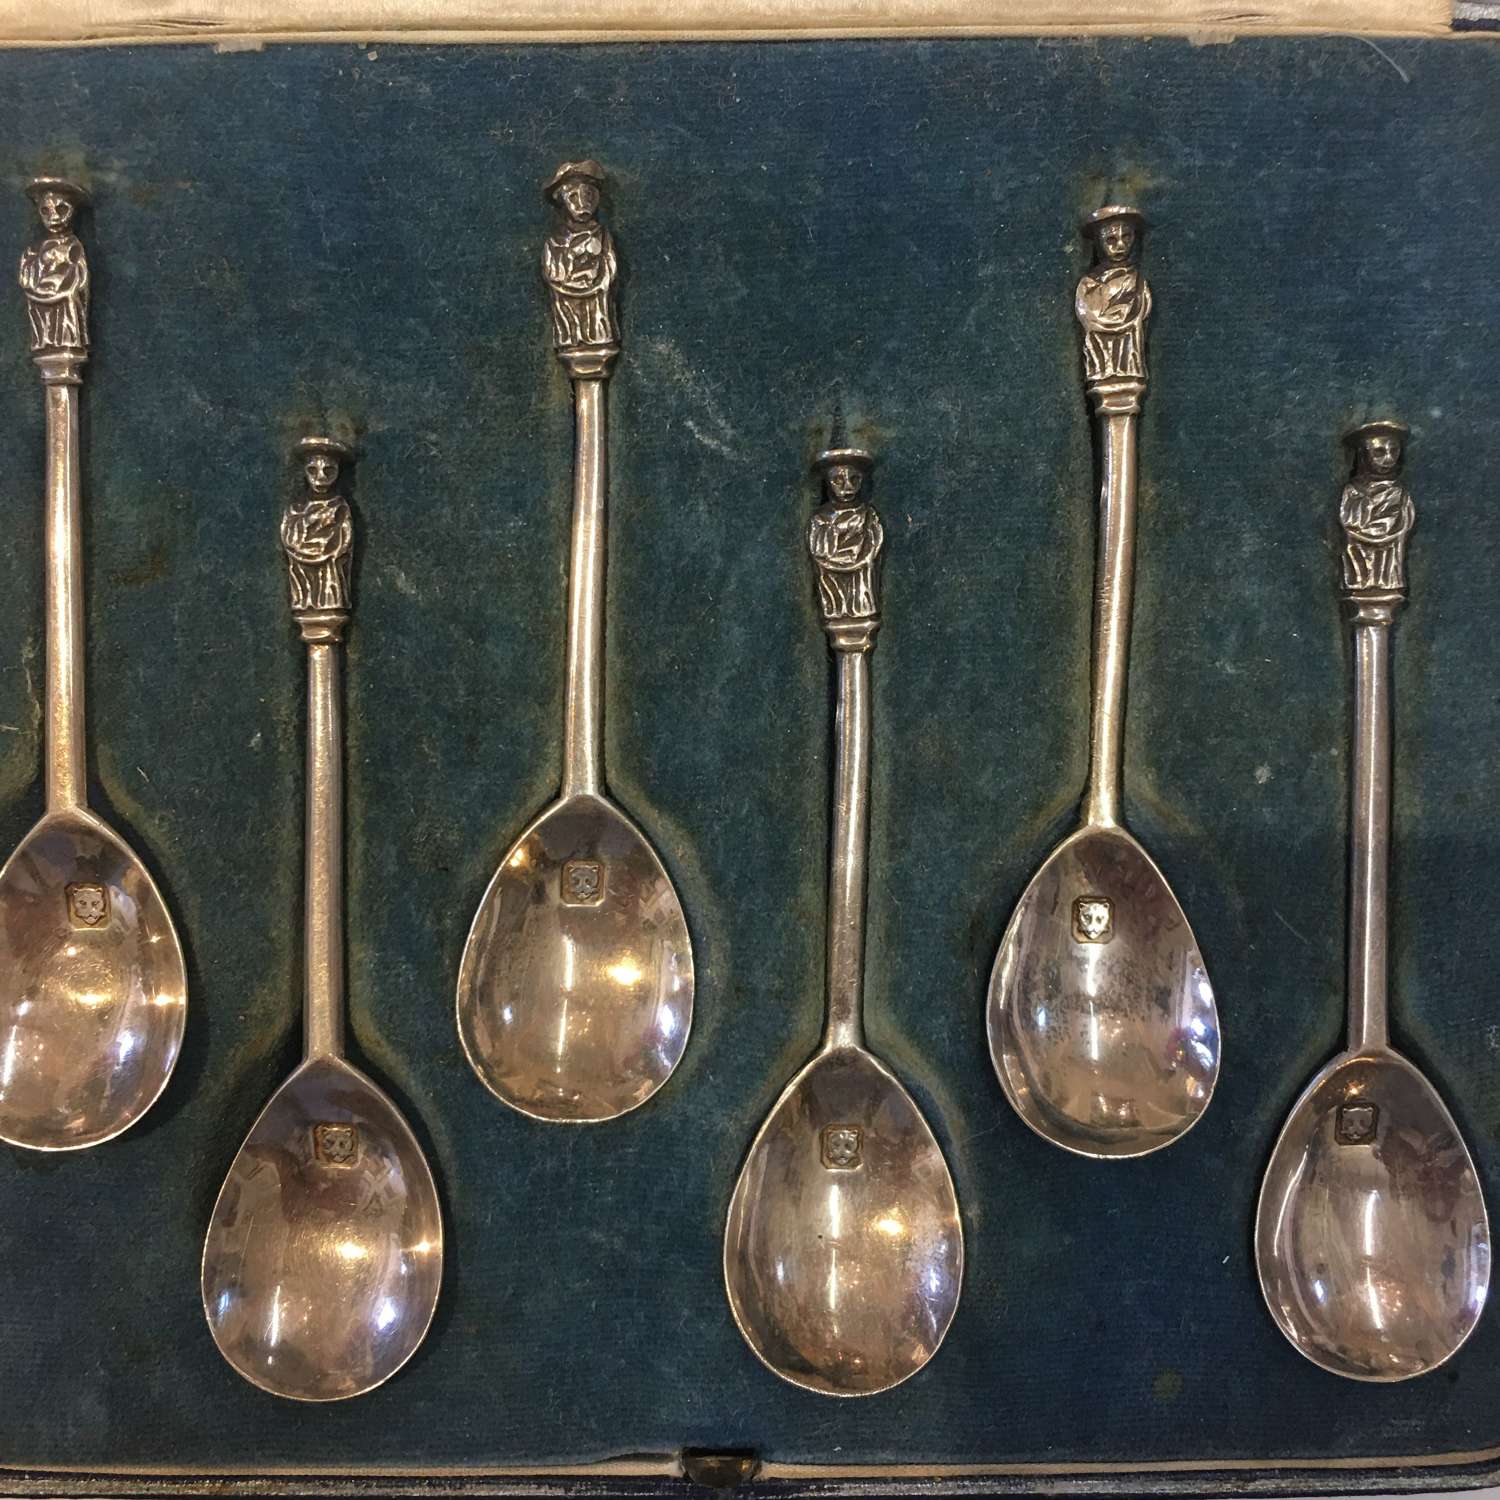 Hallmarked 1936 London set of six spoons